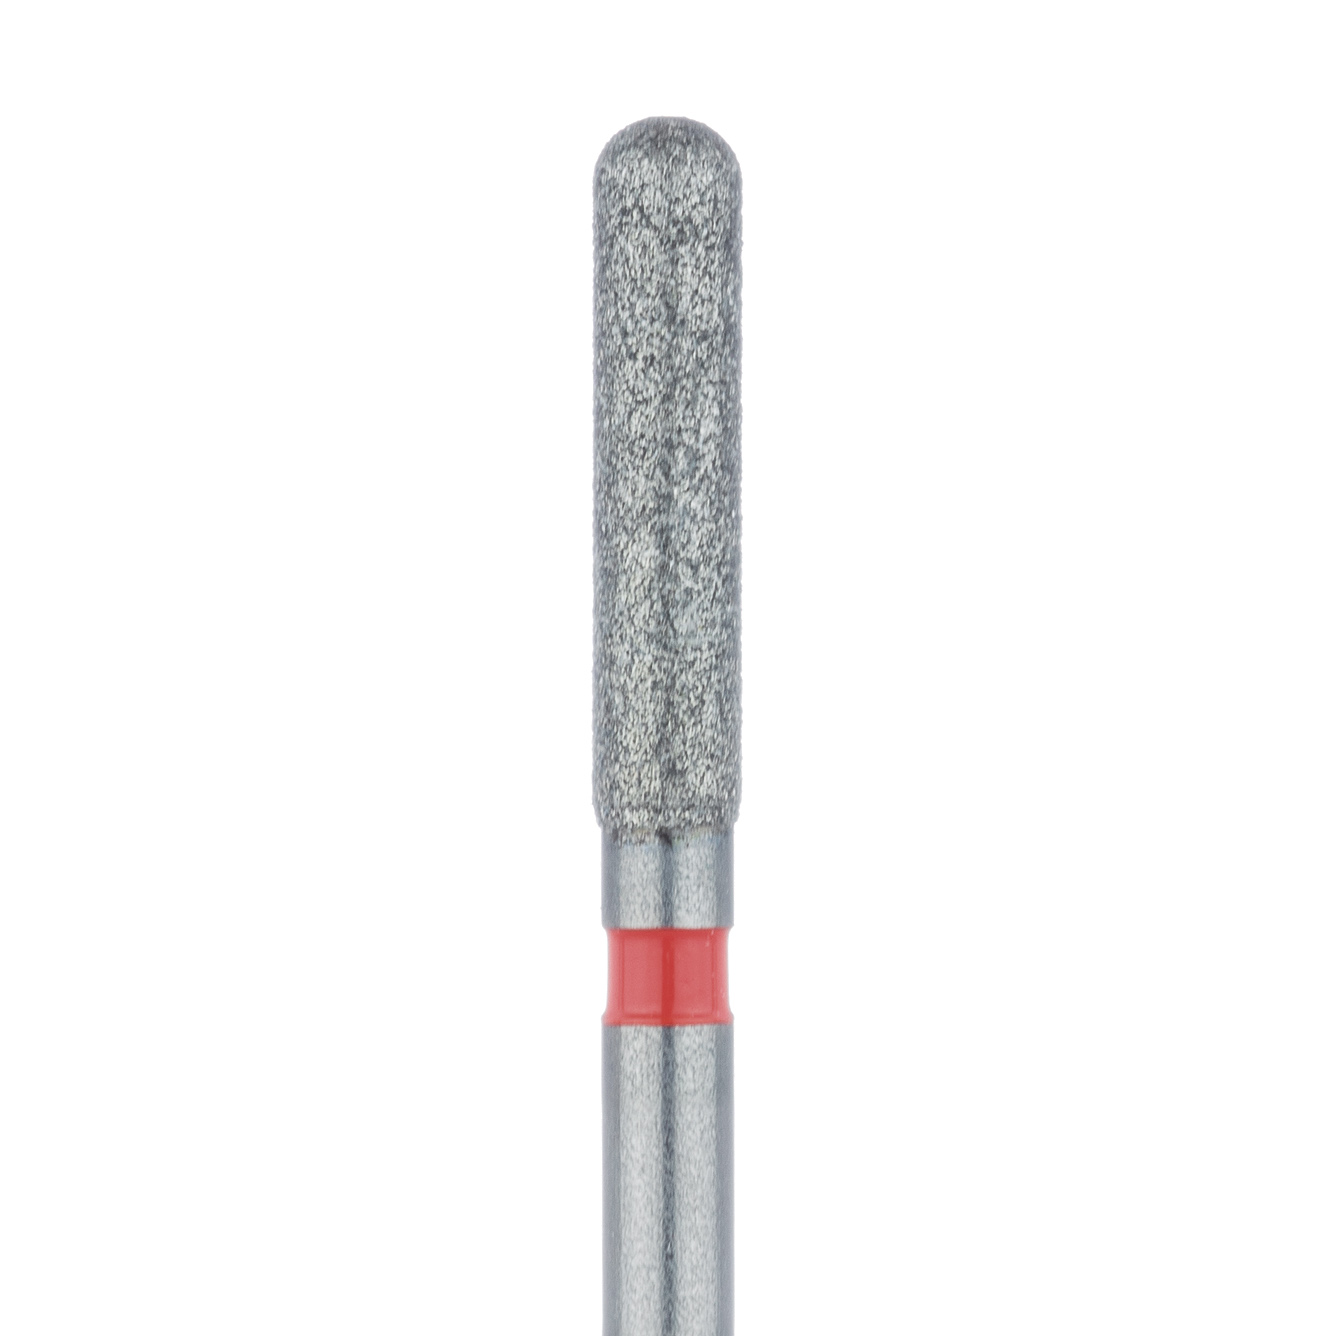 881F-018-FG Round End Cylinder Diamond Bur, 1.8mm Ø, Fine, FG